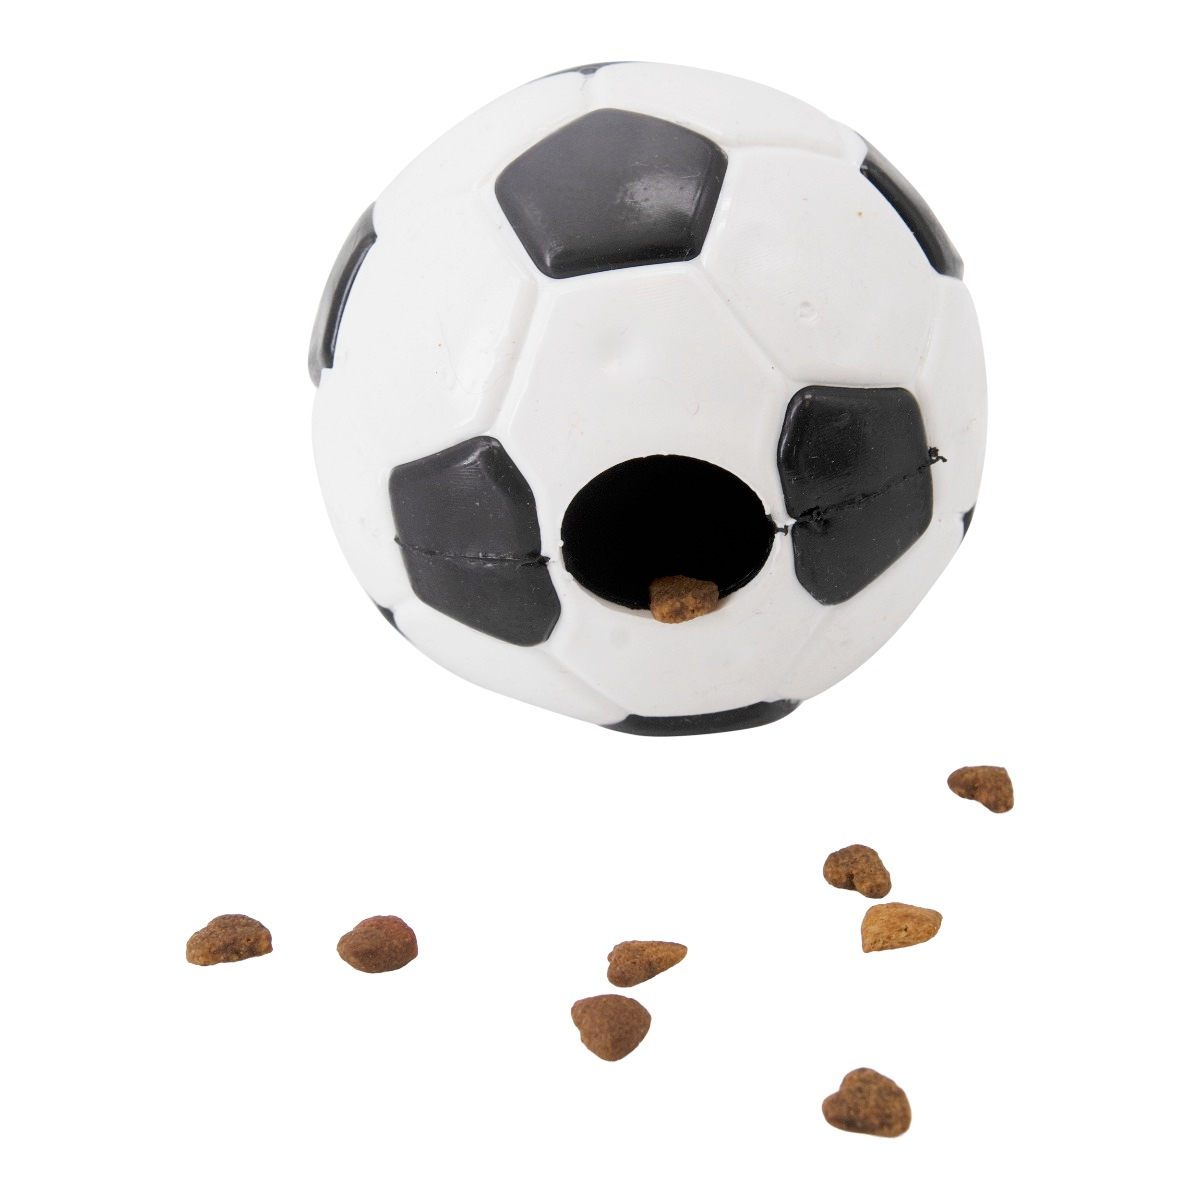 Dog Toy: Orbee-Tuff Soccer Ball